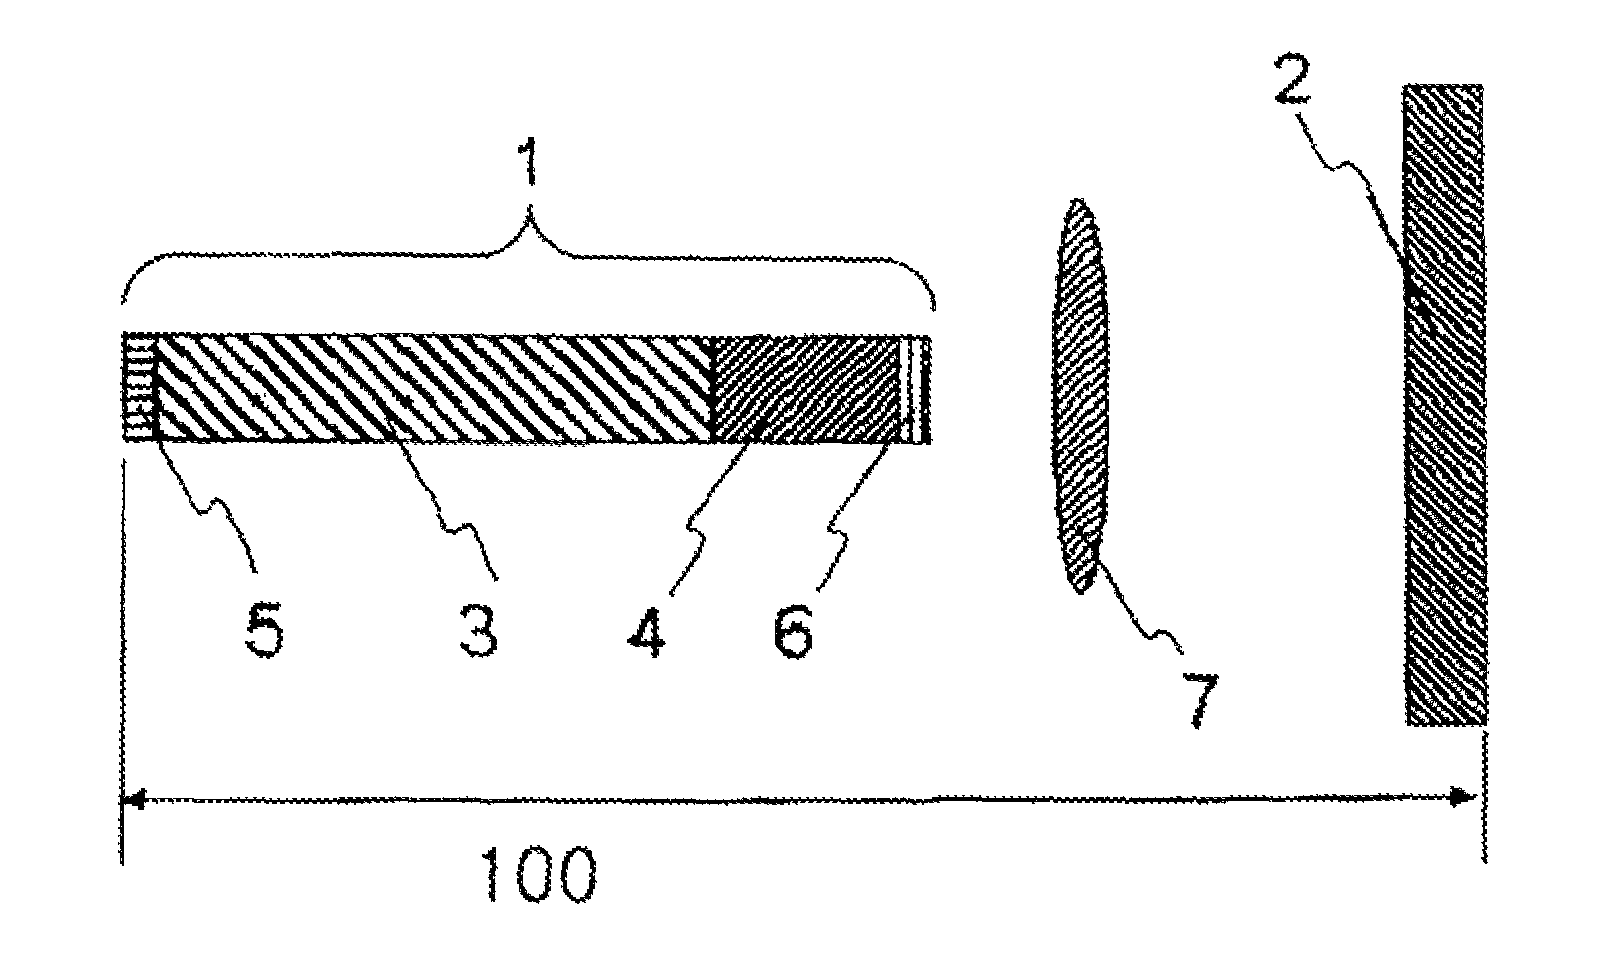 External resonator-type wavelength tunable laser device